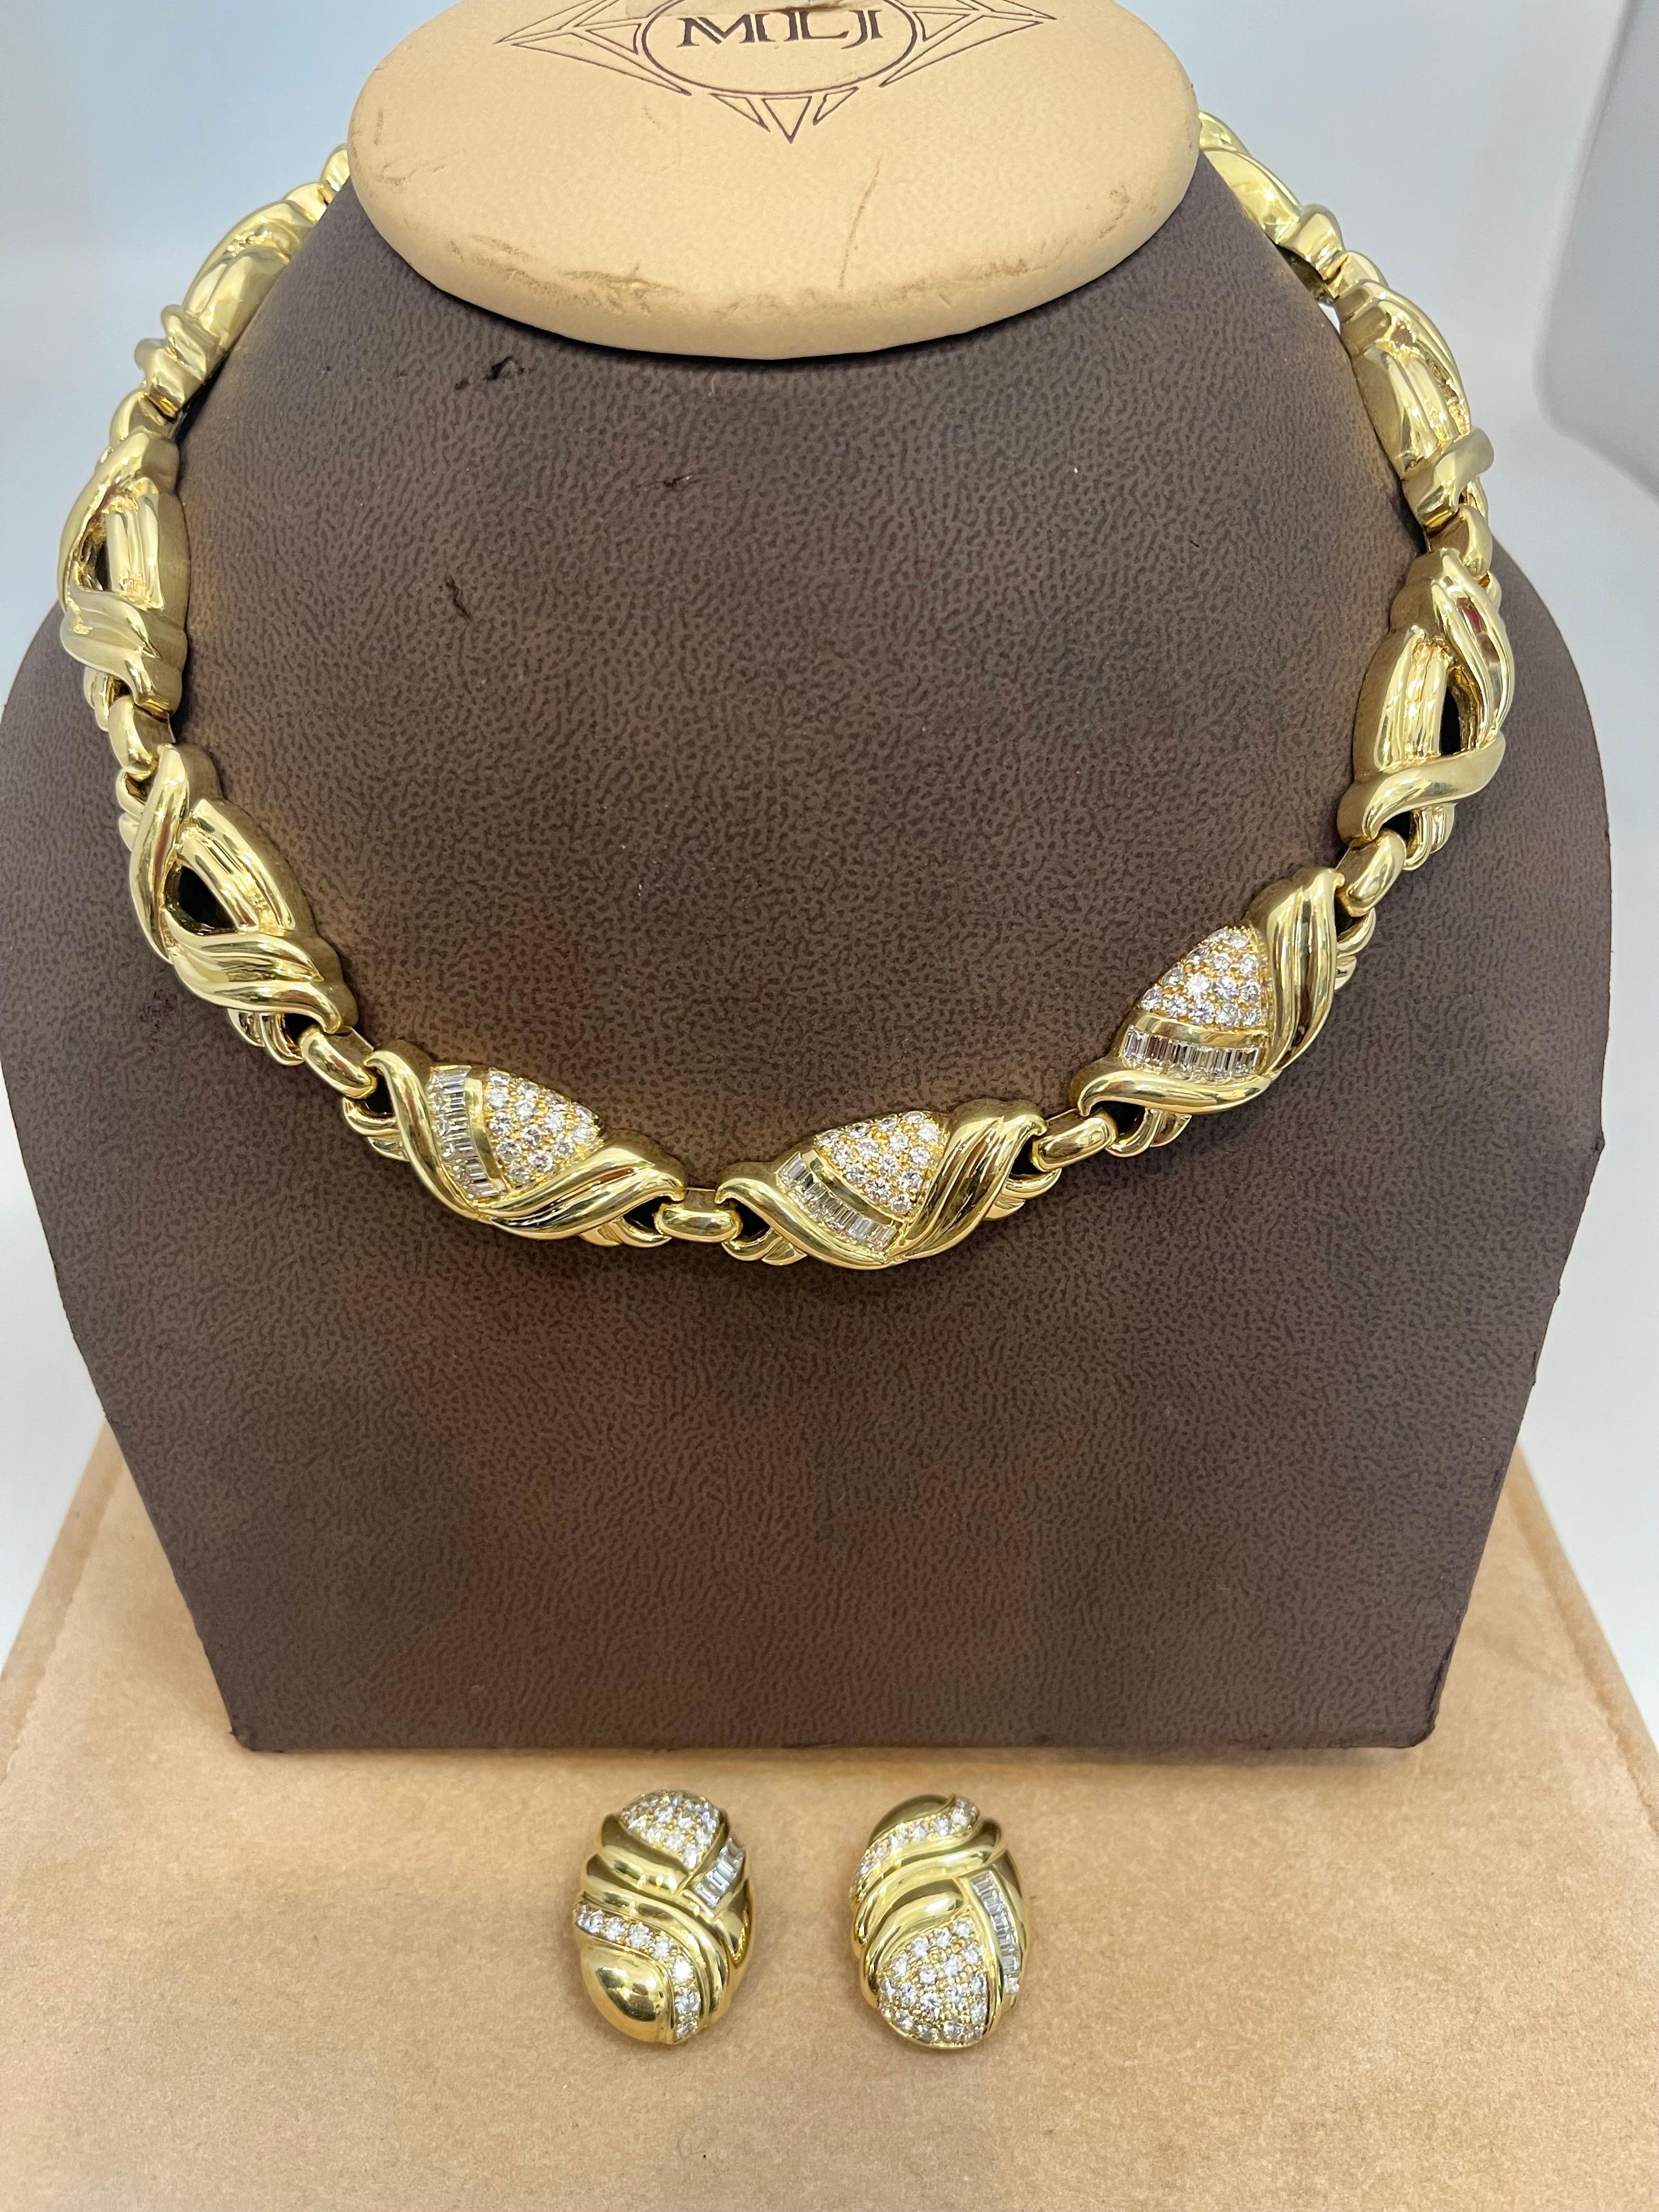 9 Carat Diamond Necklace & Earrings Bridal Suite 159 Gm 18 Karat Yellow Gold For Sale 3